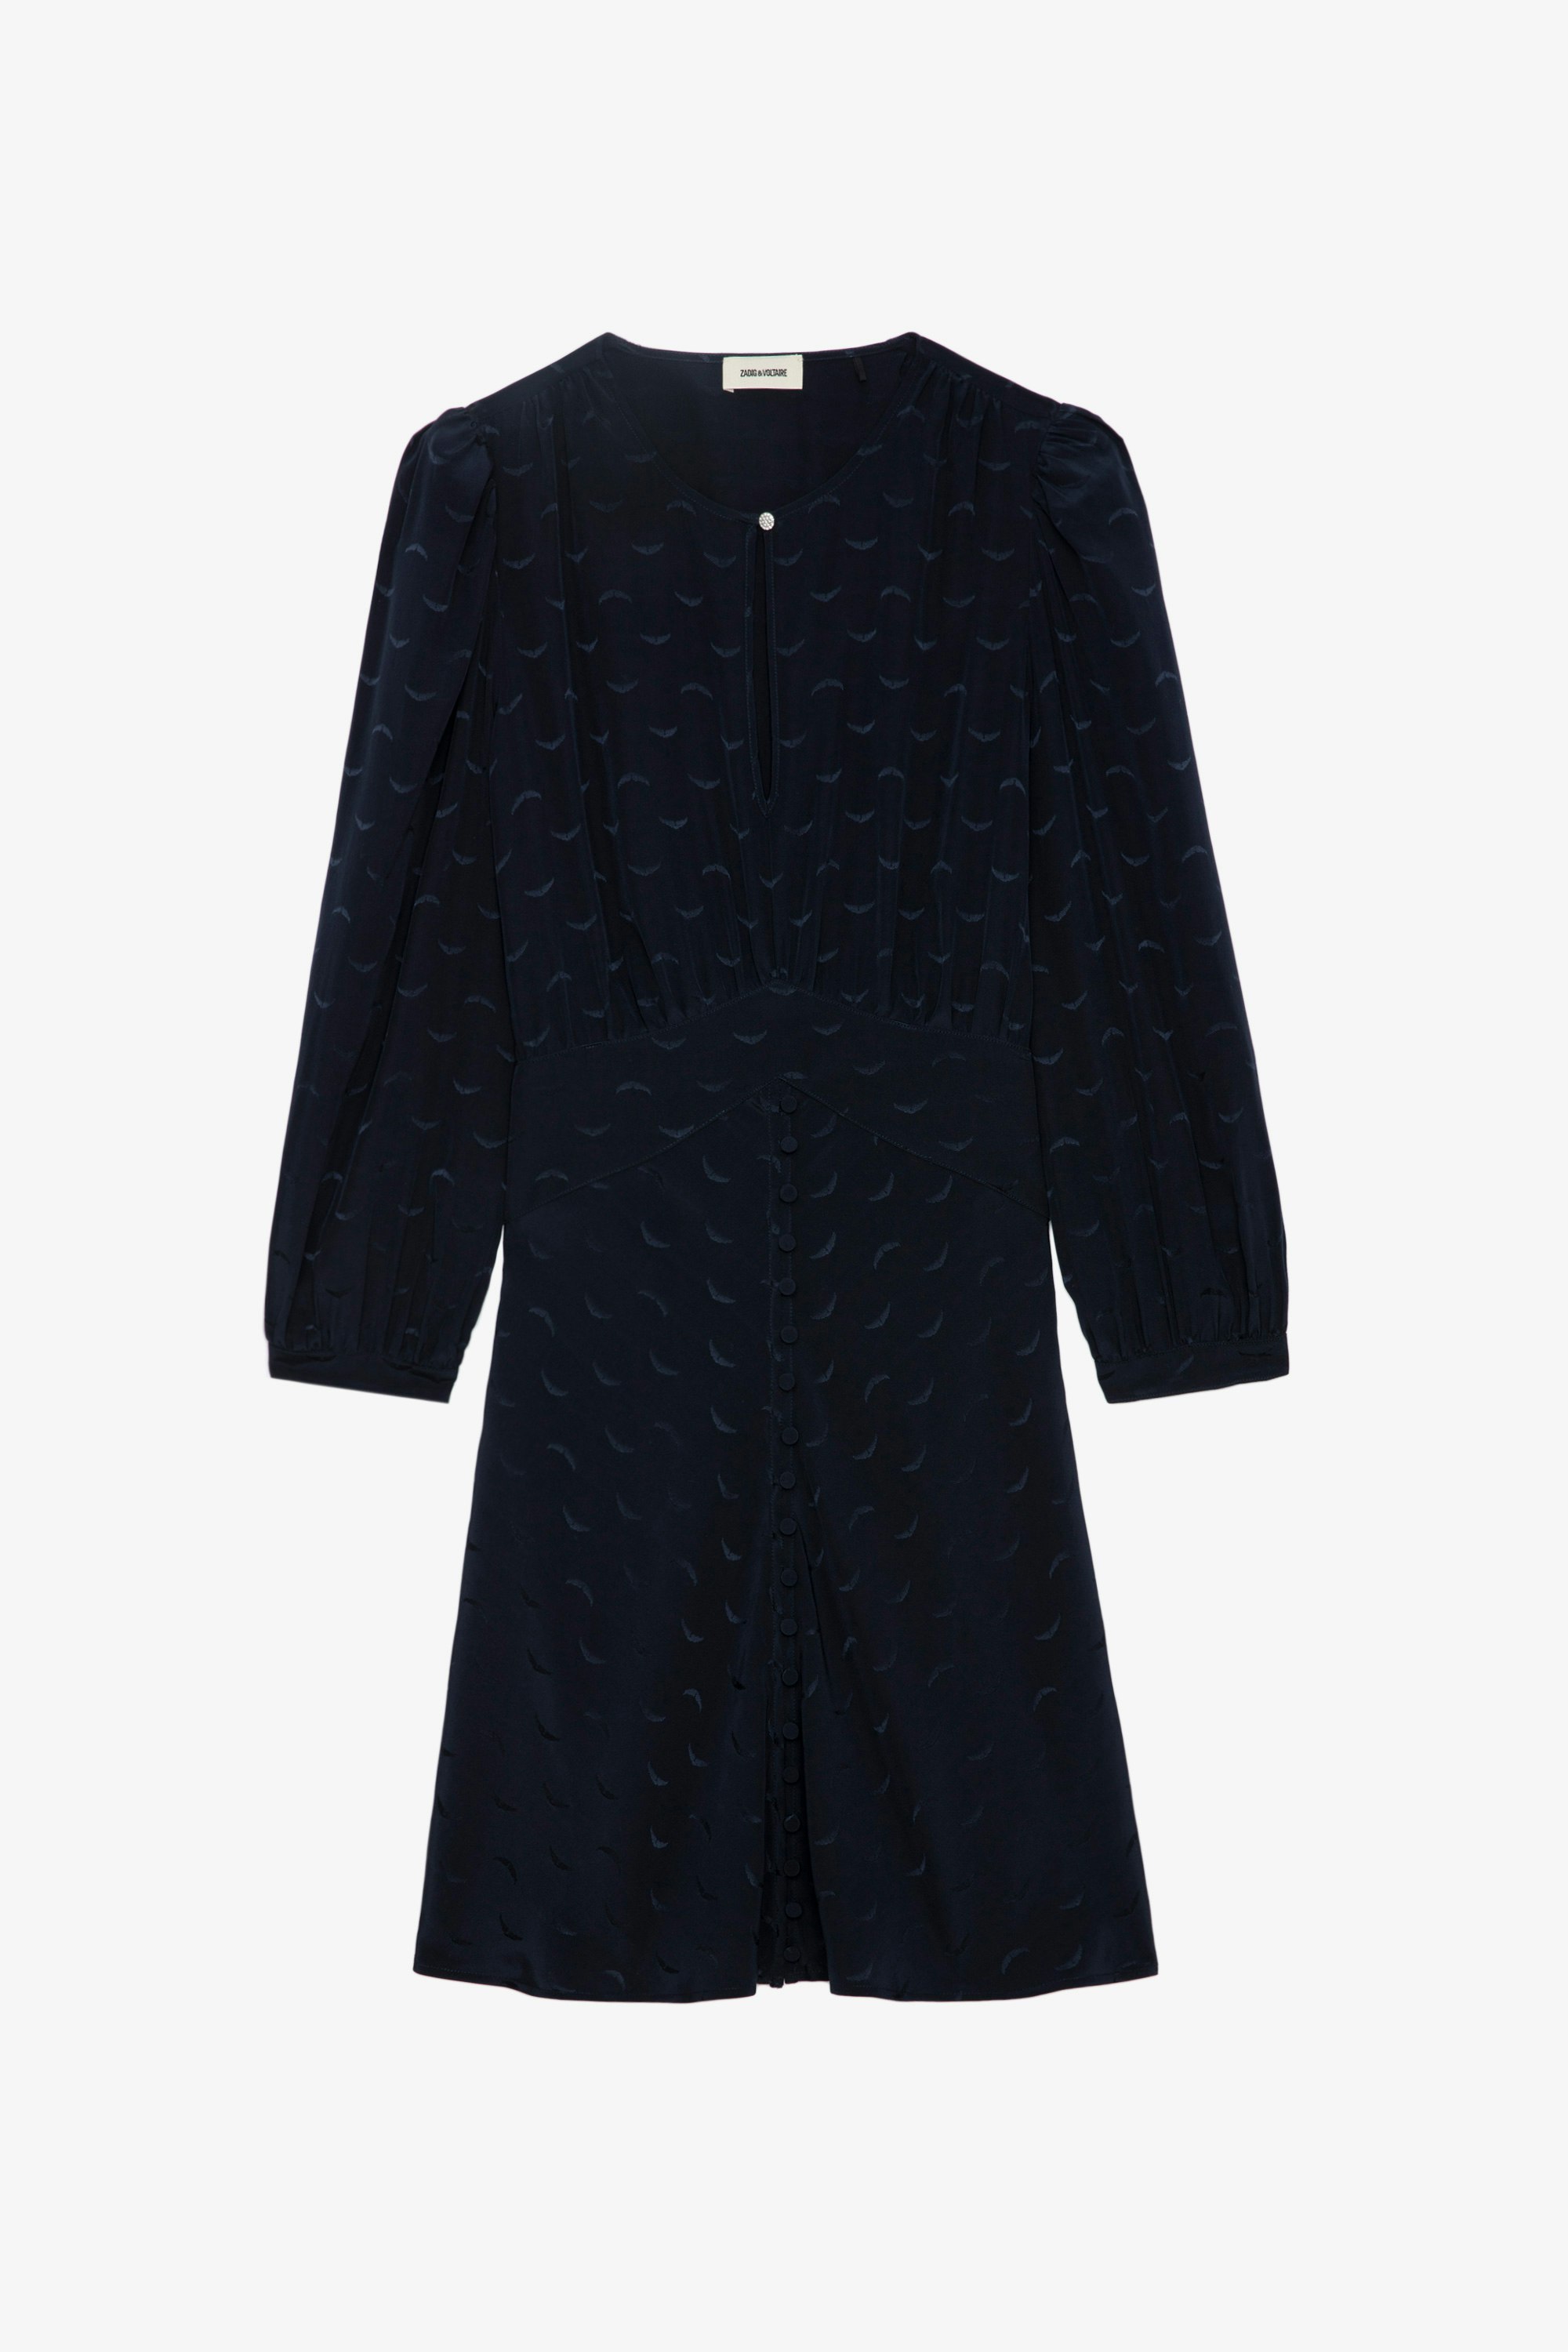 Rhodri Silk Jacquard Dress - Short navy blue silk dress with jacquard wings, button closure and 3/4-length sleeves.